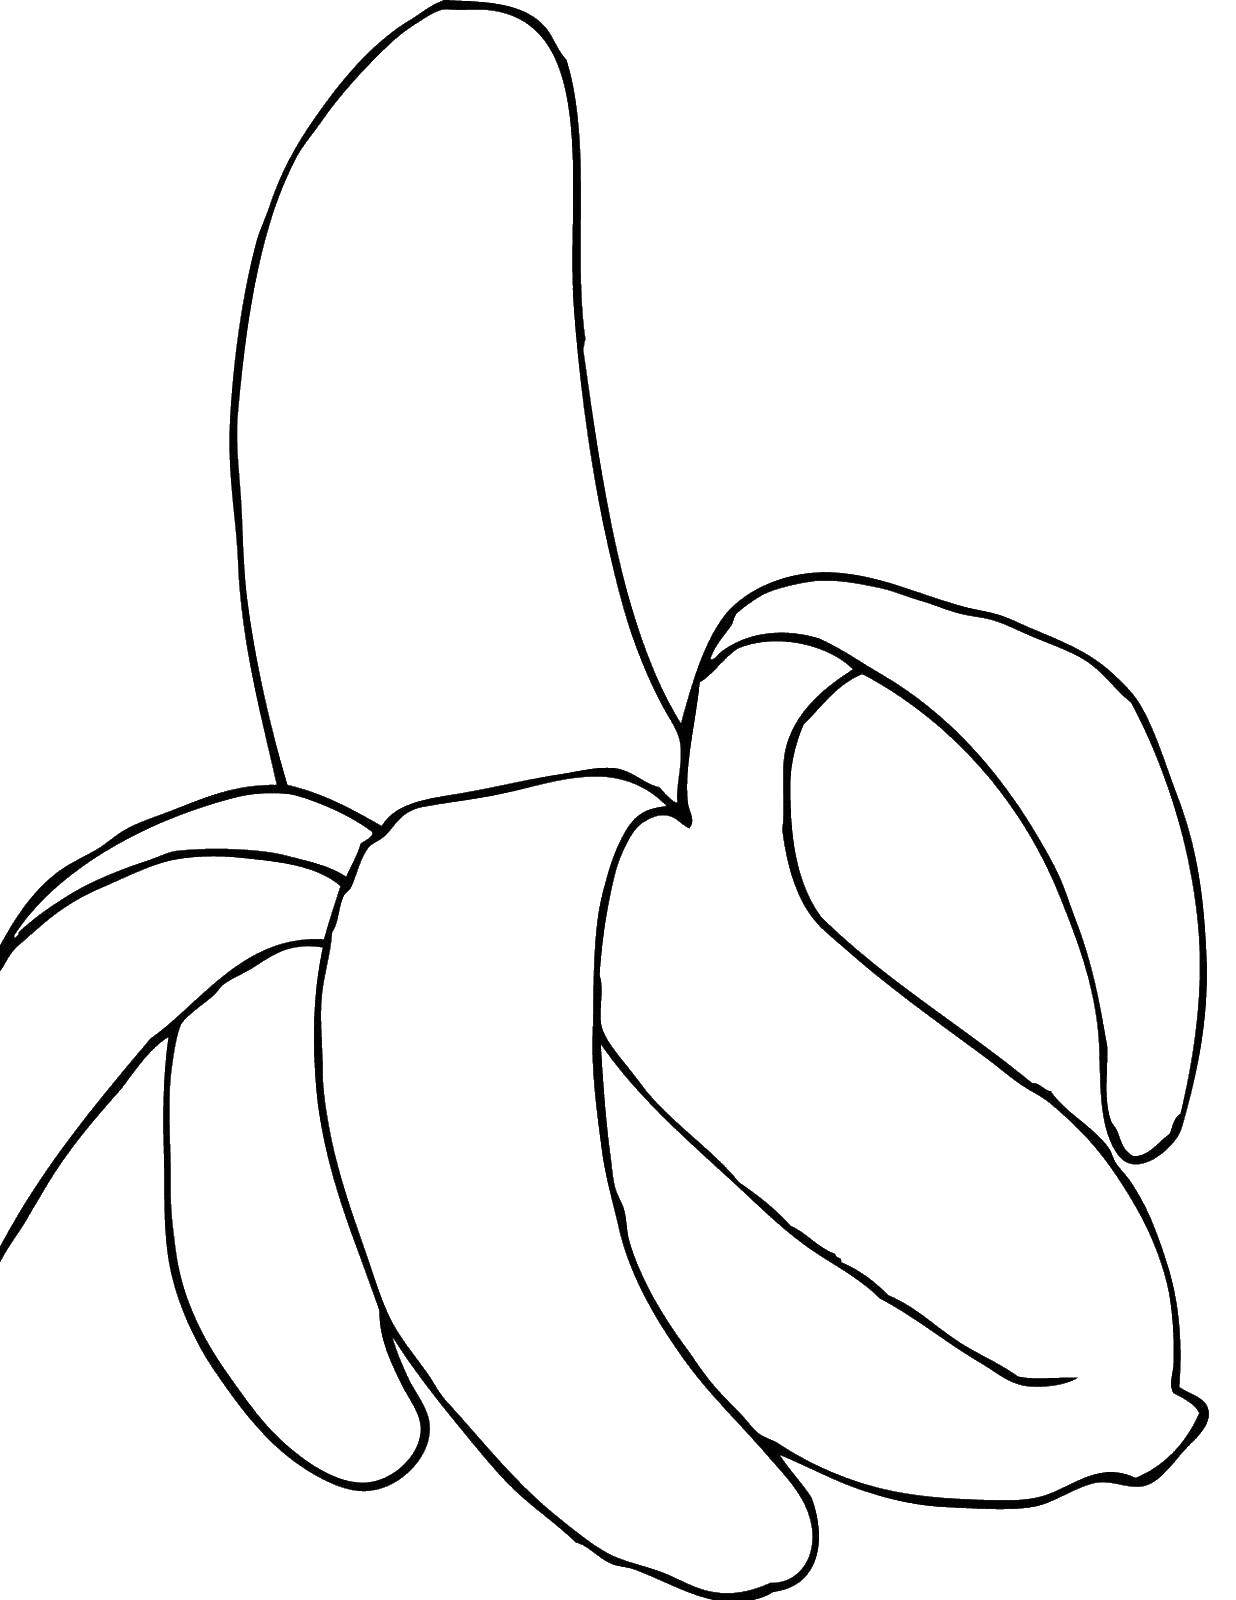 Название: Раскраска Открытый банан. Категория: фрукты. Теги: фрукты, банан.